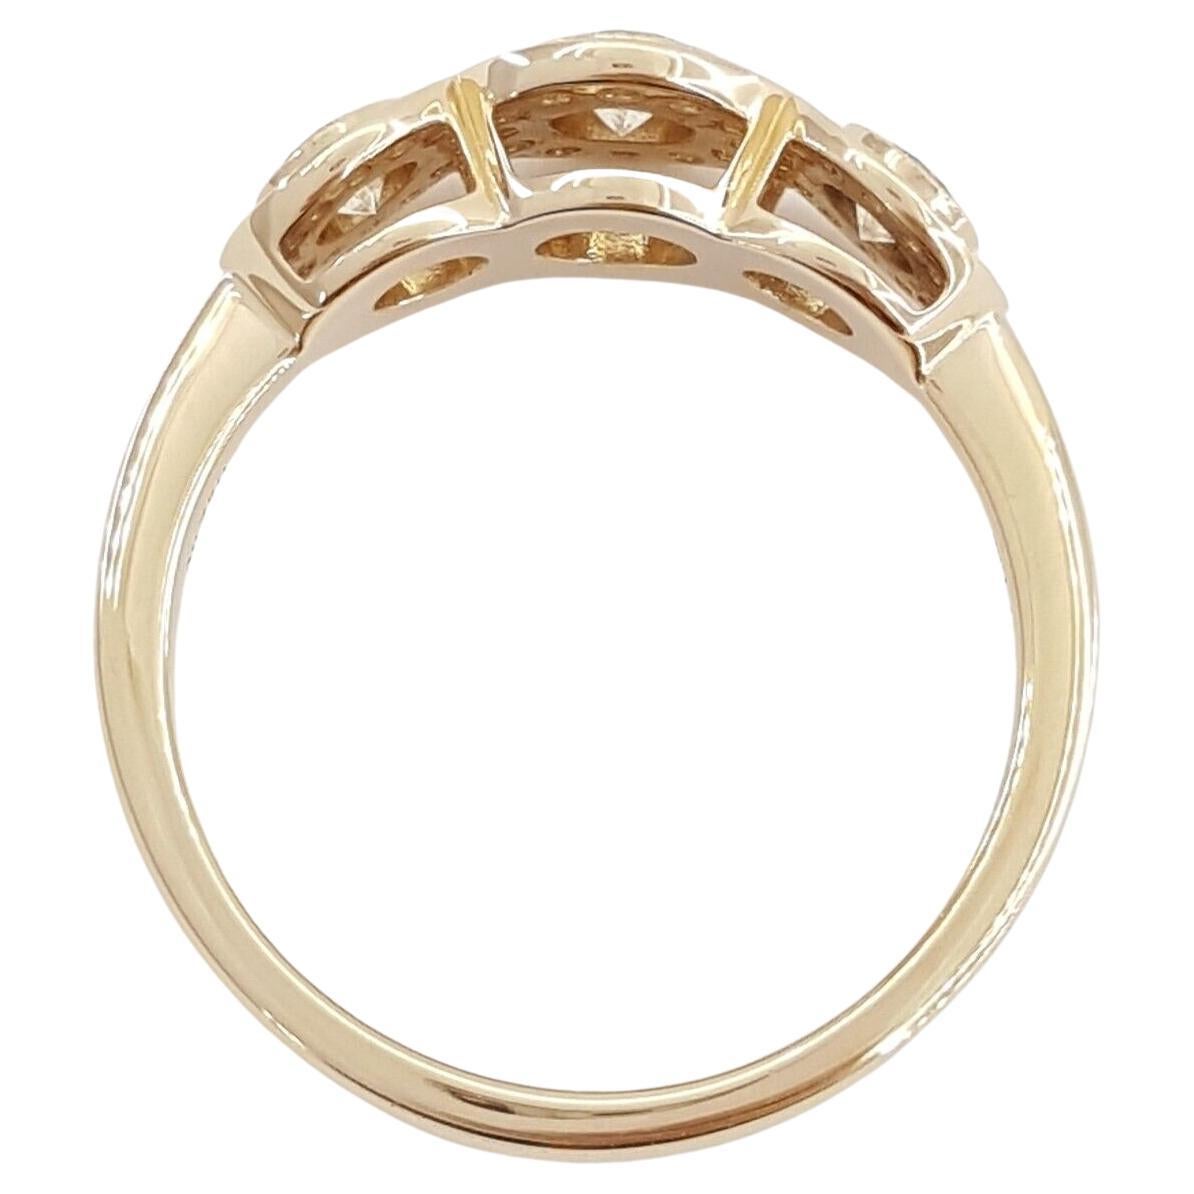 Tiffany & Co. Three-Stone Round Brilliant Diamond Halo Engagement Ring.

